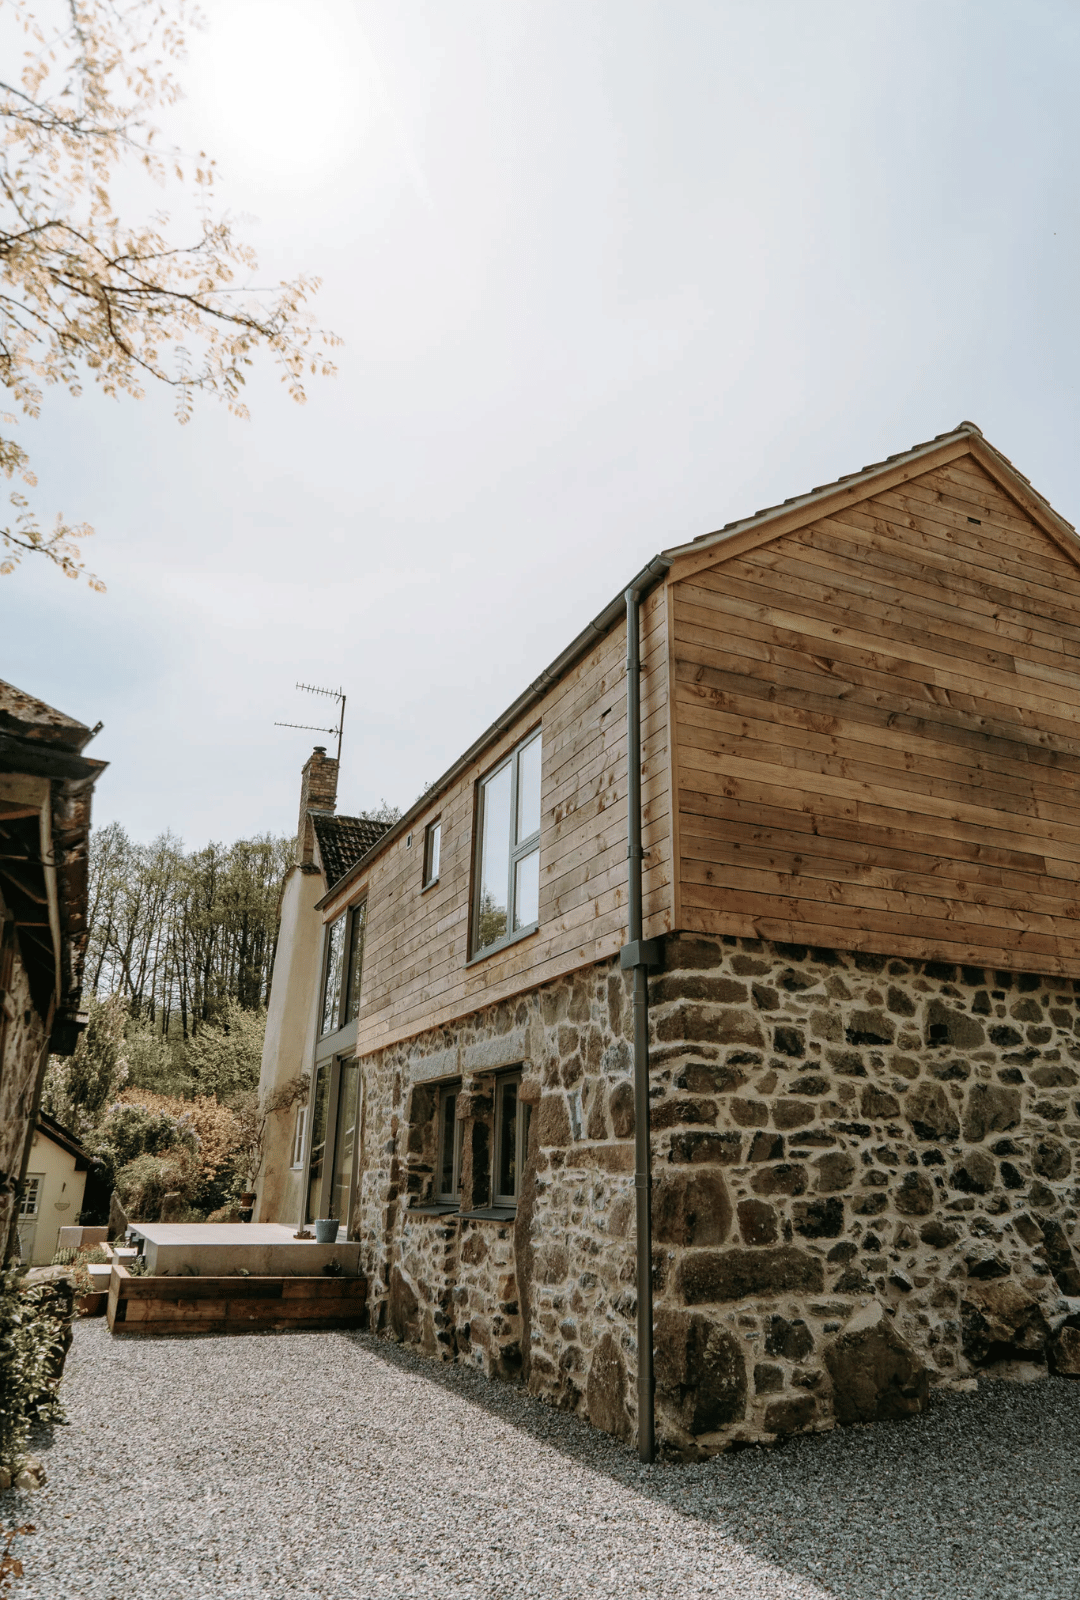 Armada property - Devon Property Development    -   stone farm project - Beautiful rustic farm house - exterior two story renovation